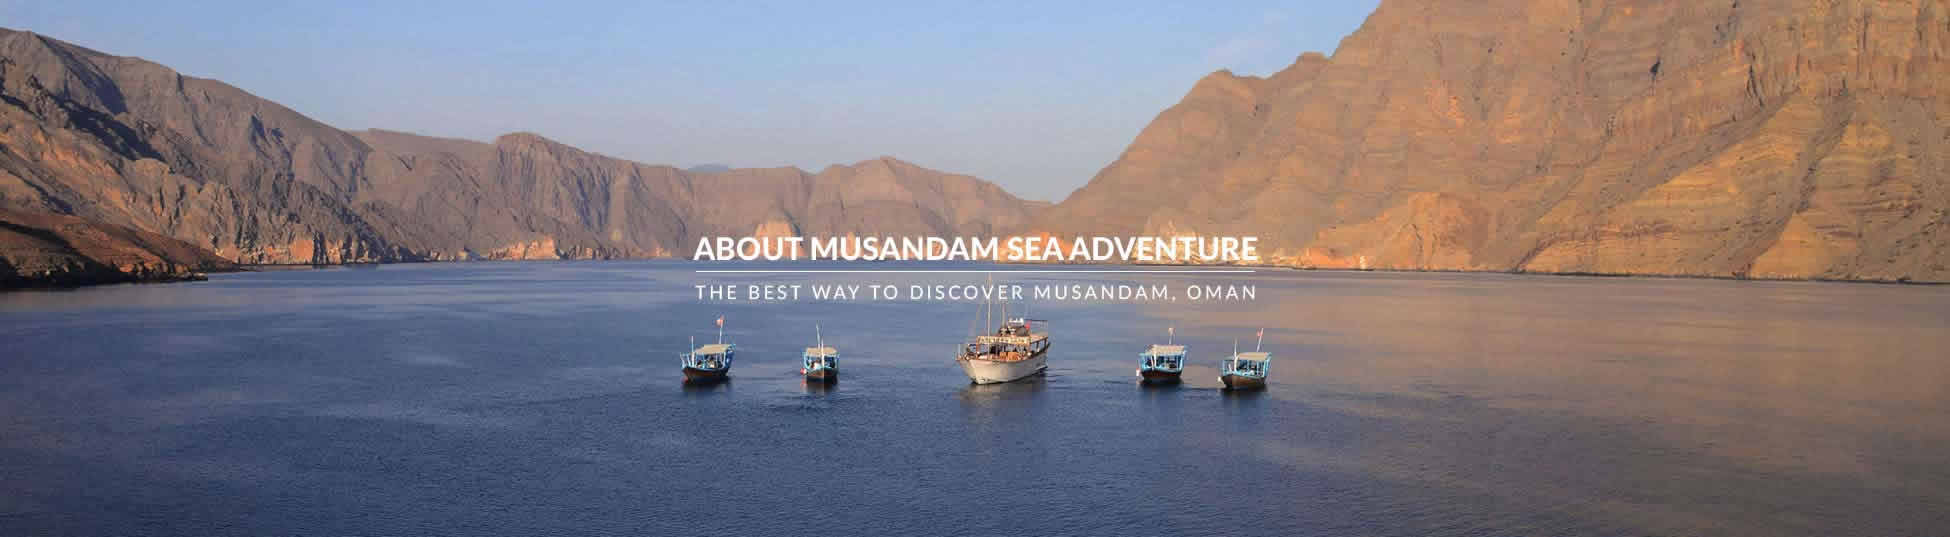 Musandam trip